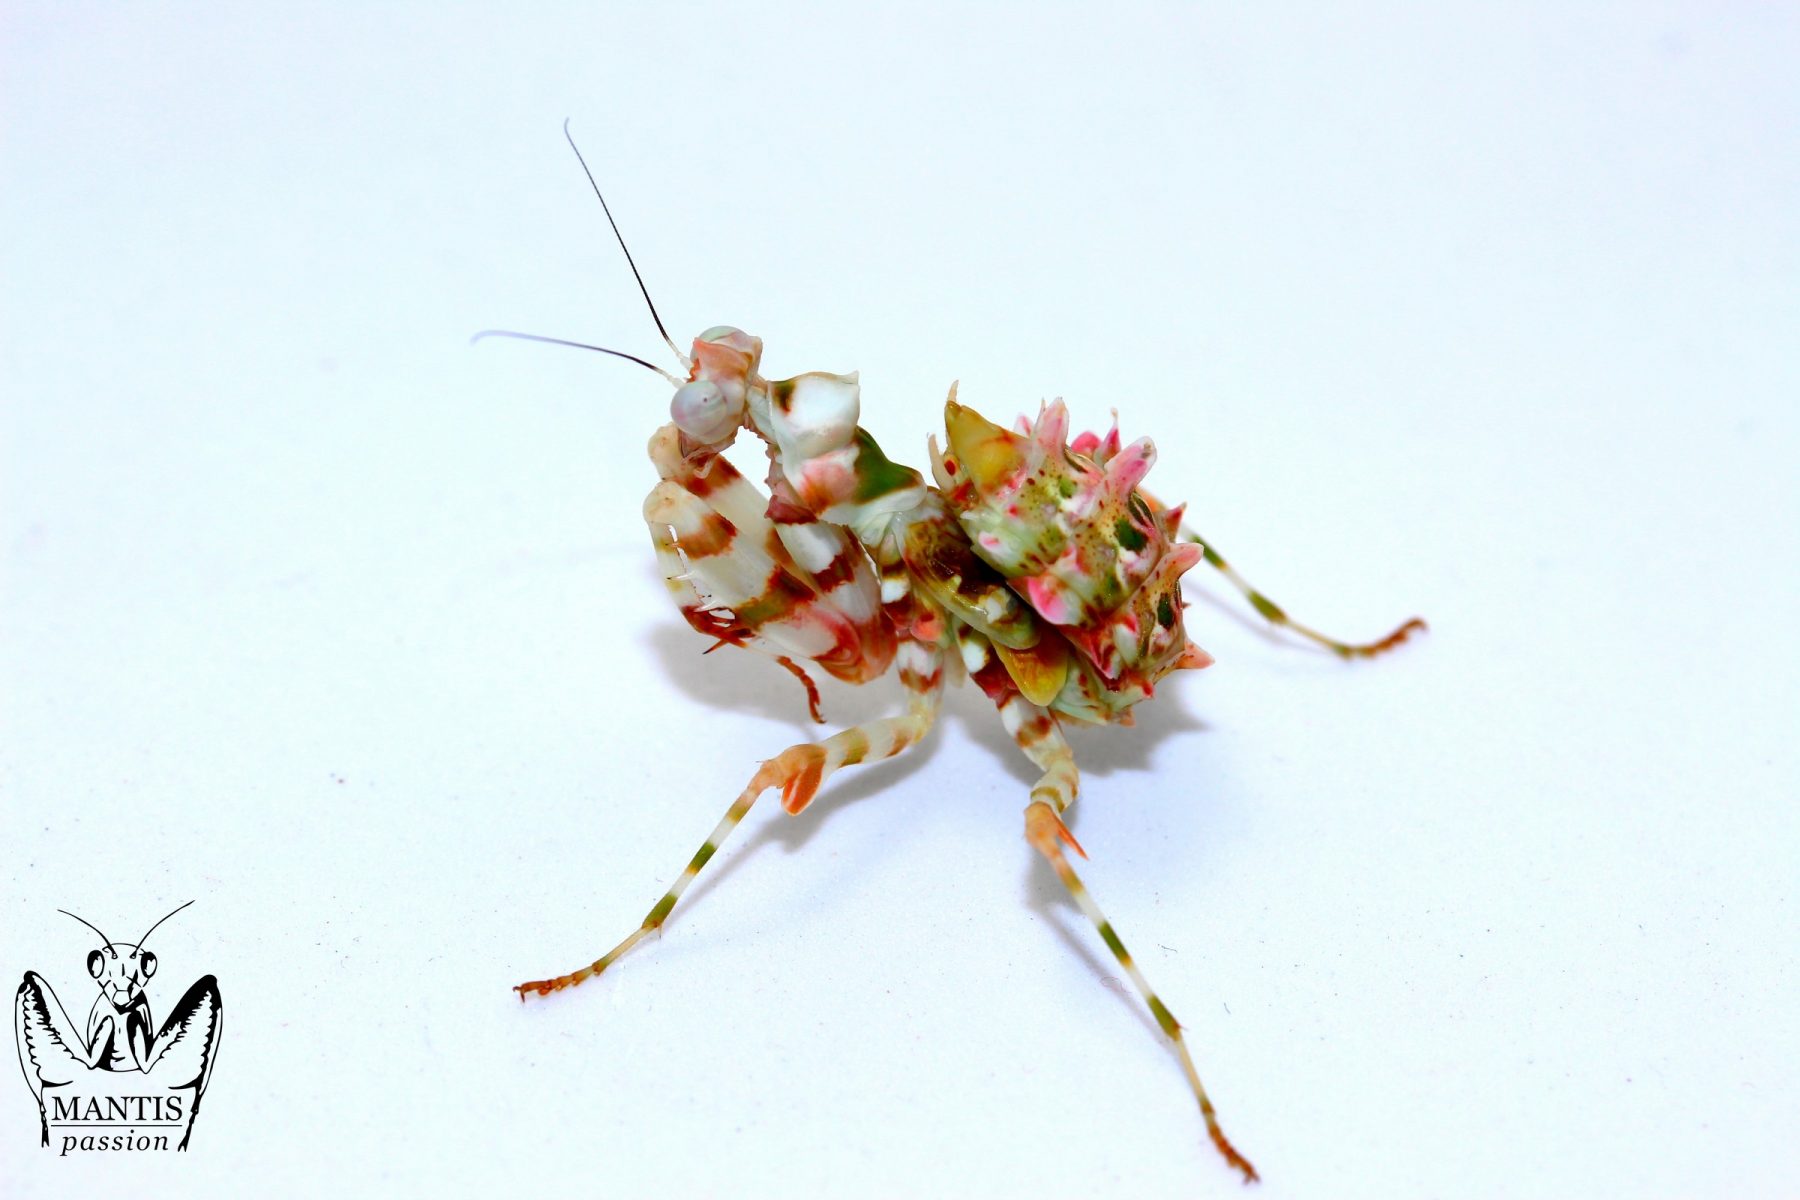 Chlidonoptera lestoni femelle sub adulte